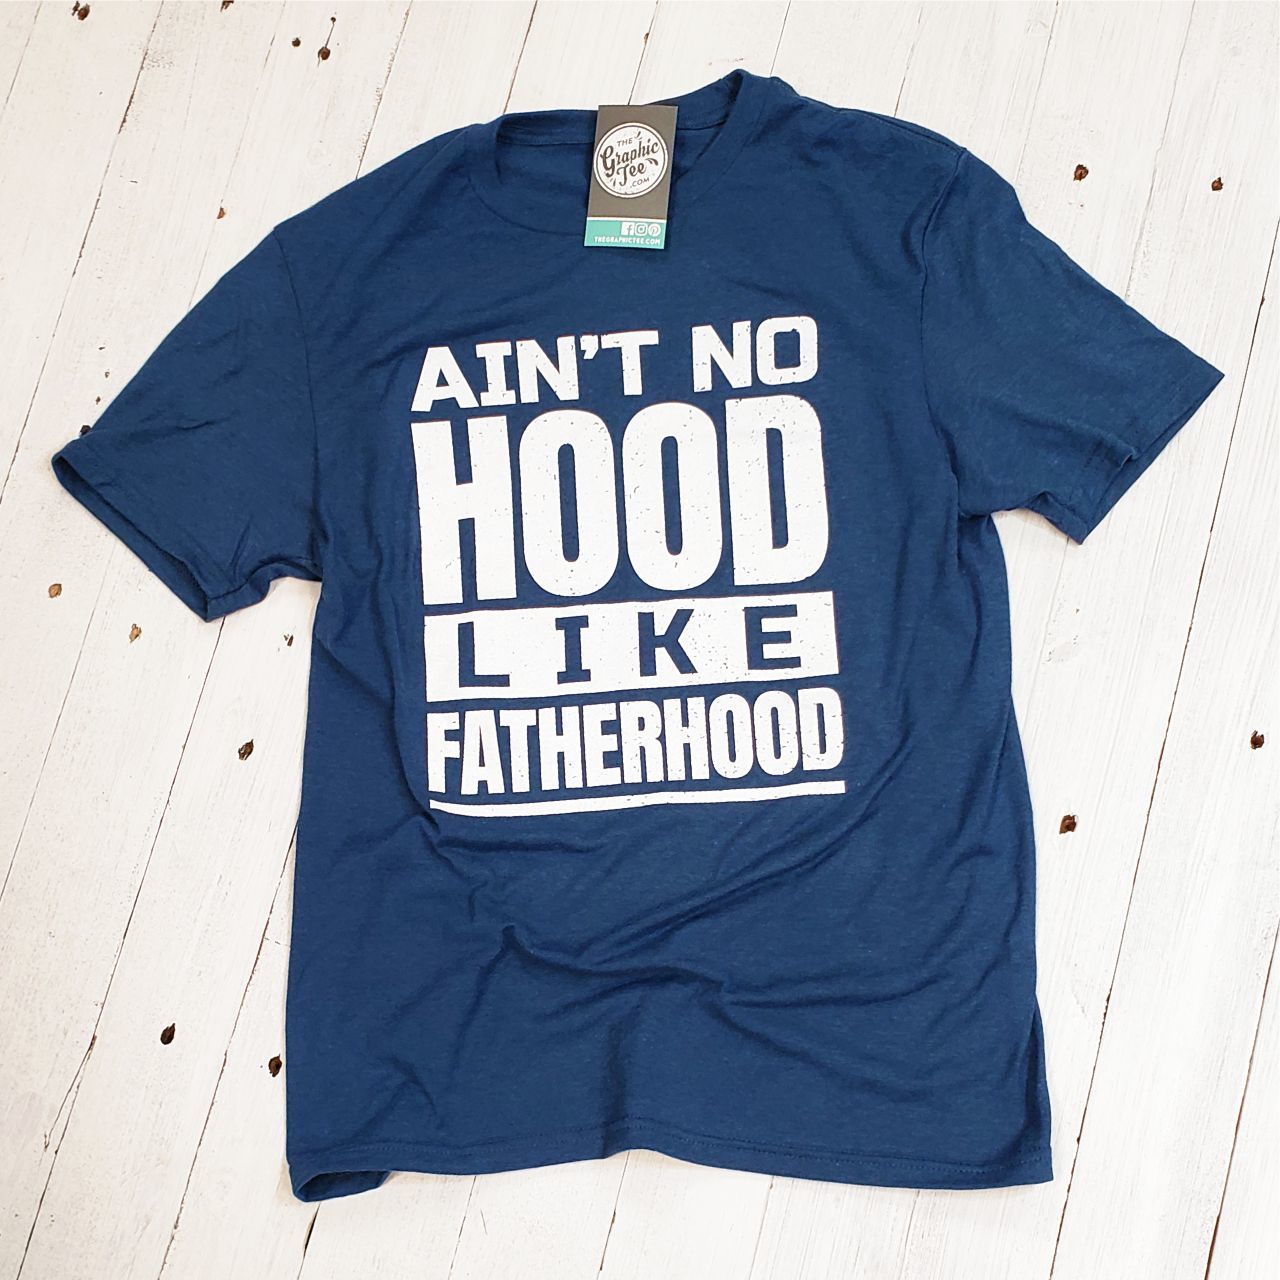 Ain't No Hood Like Fatherhood - Adult Tee - The Graphic Tee